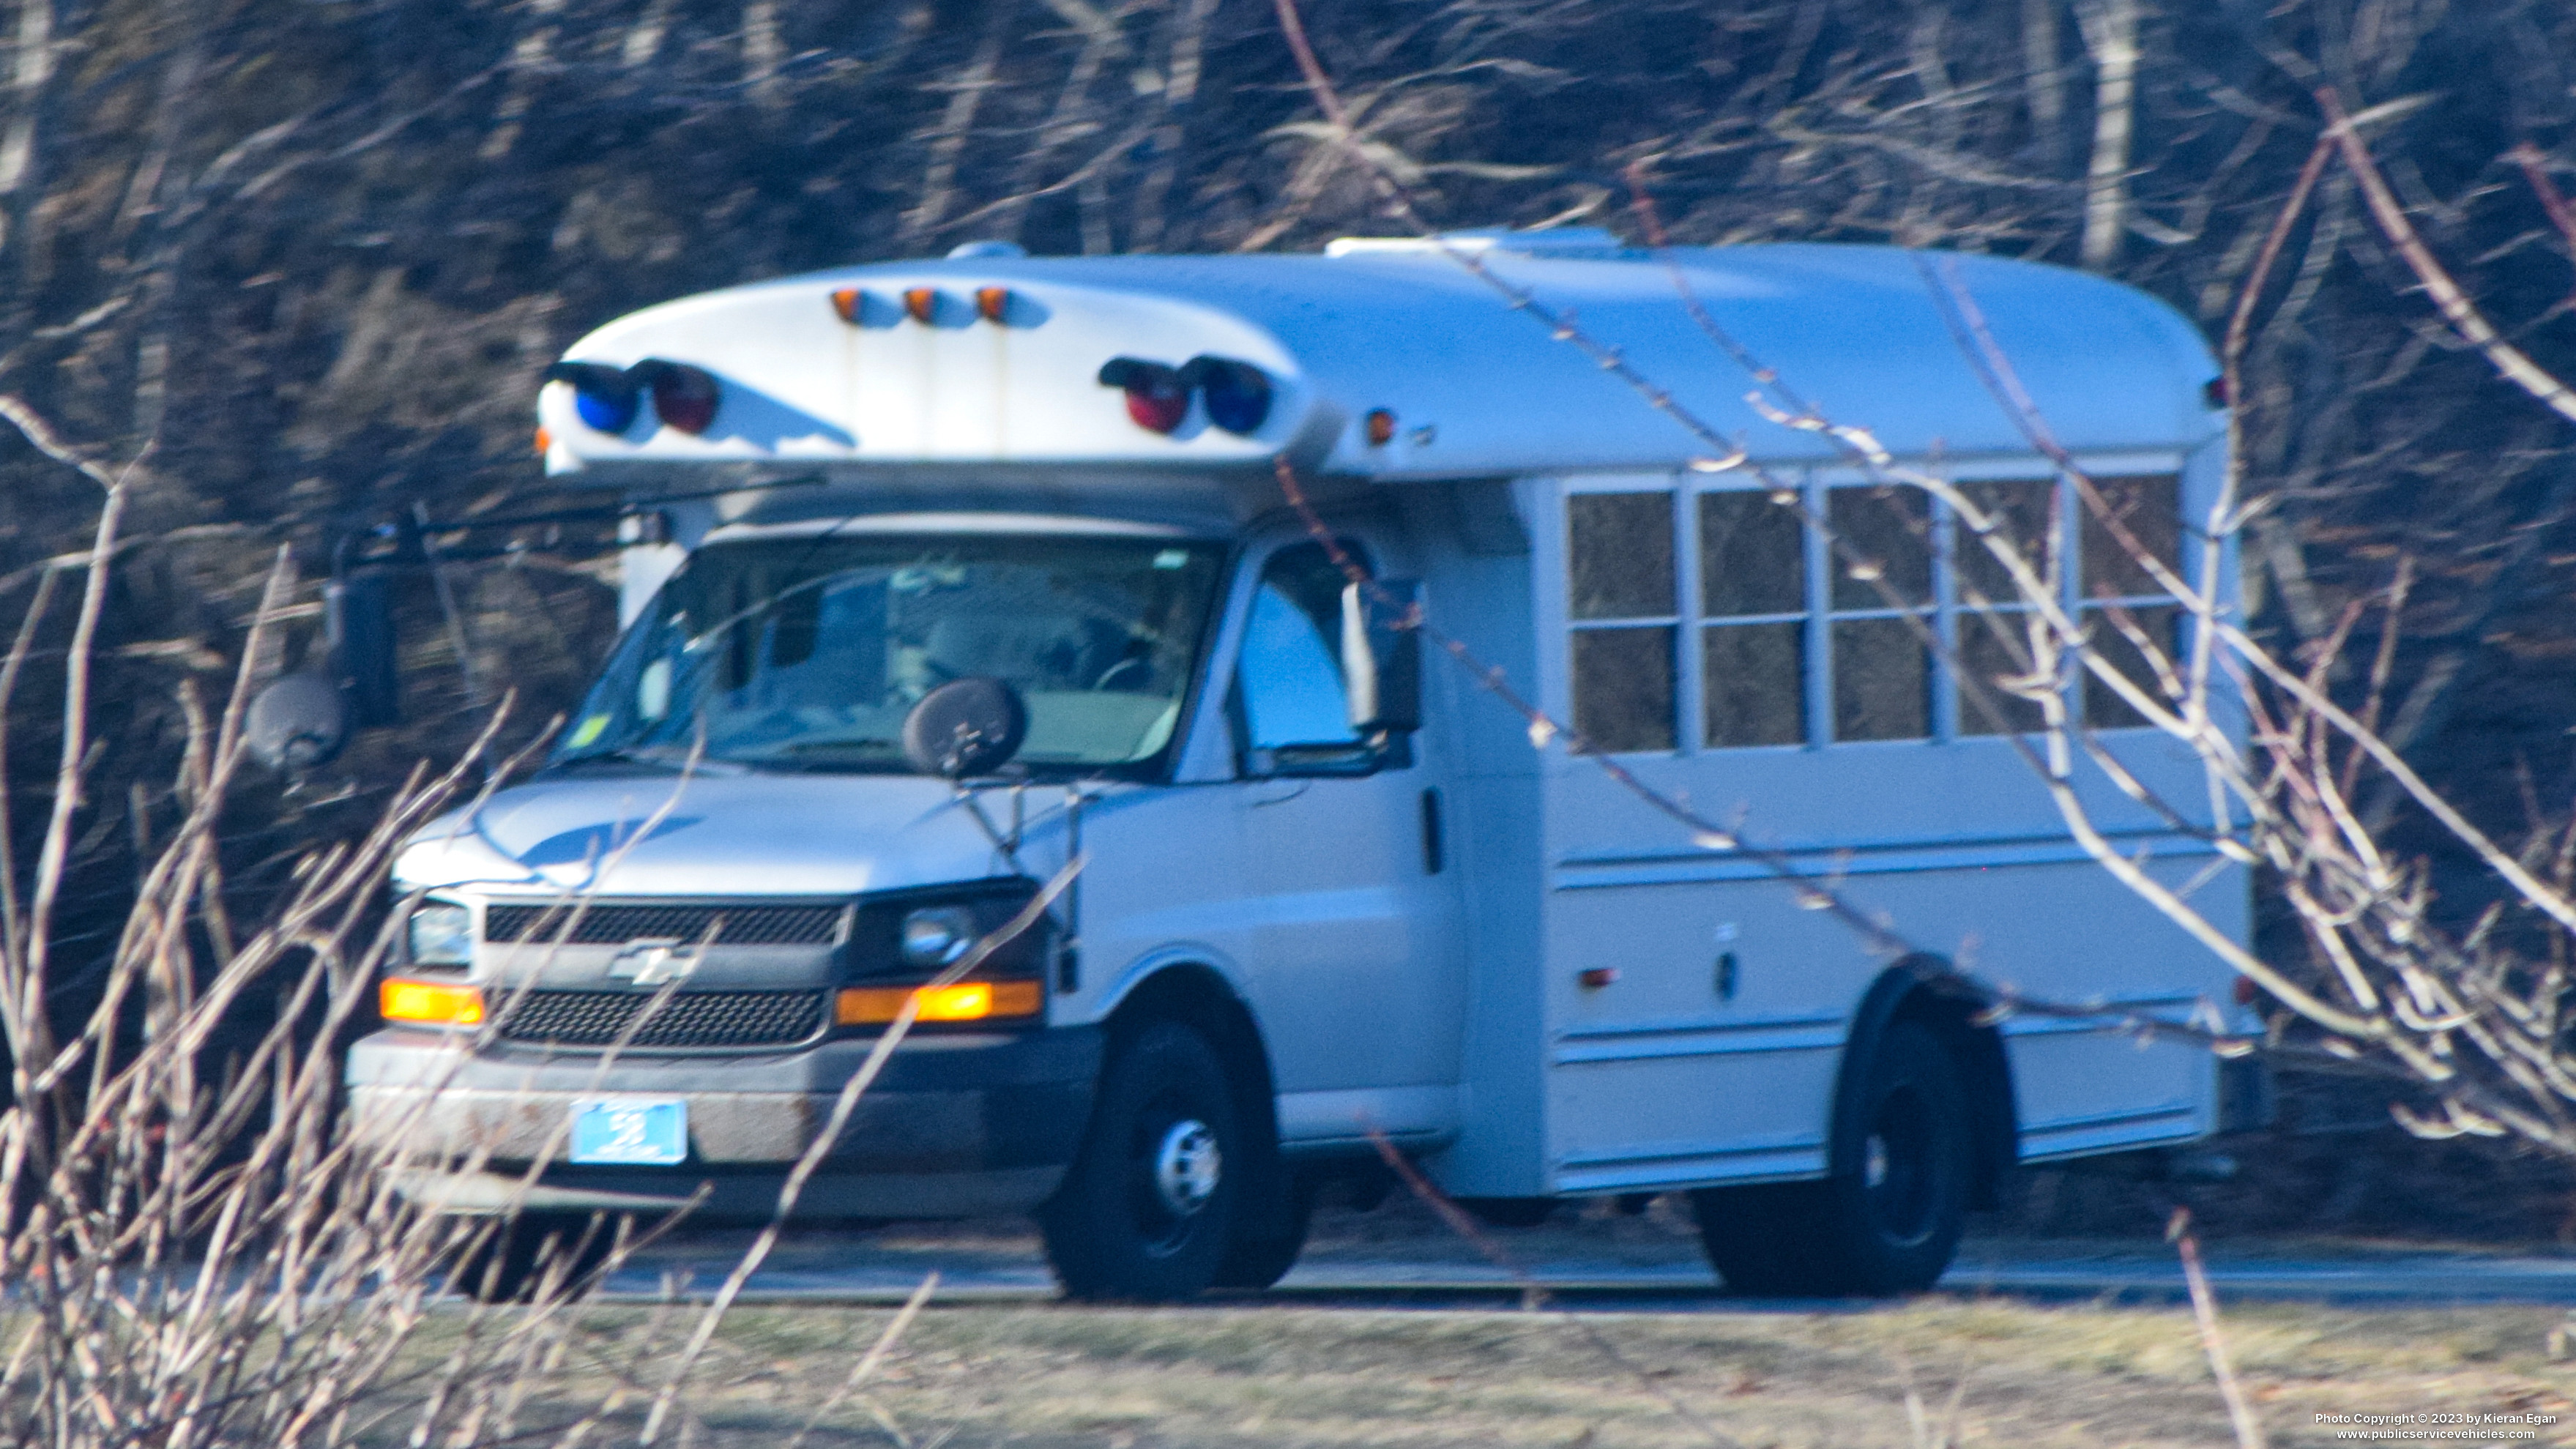 A photo  of Rhode Island Division of Sheriffs
            Bus 58, a 2003-2010 Chevrolet G4500 Bus             taken by Kieran Egan